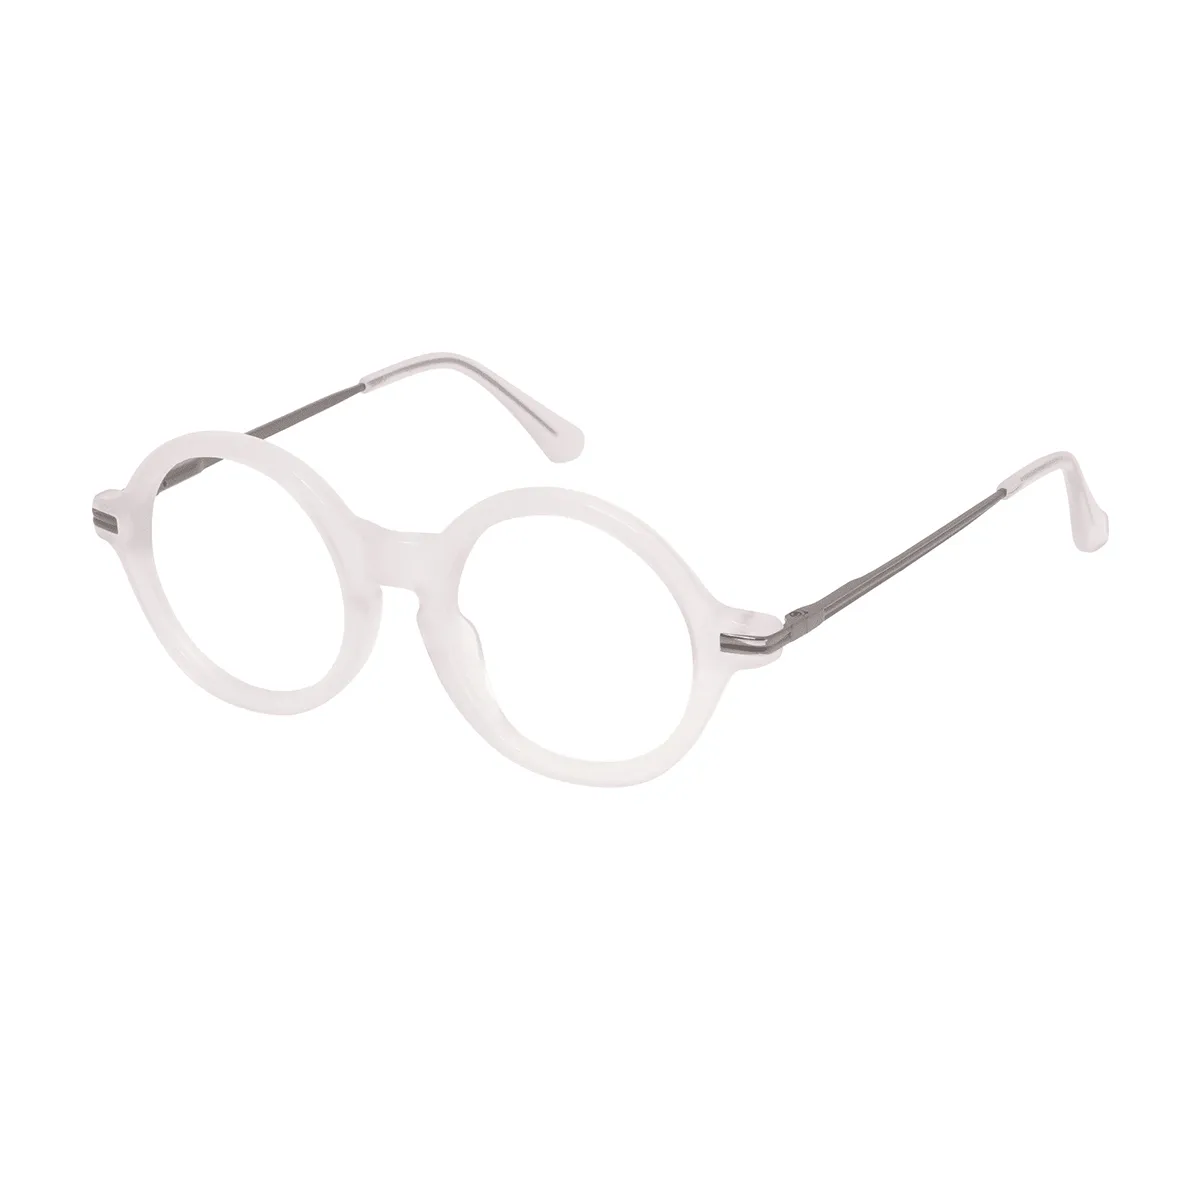 Bajer - Round Translucent Glasses for Men & Women - EFE